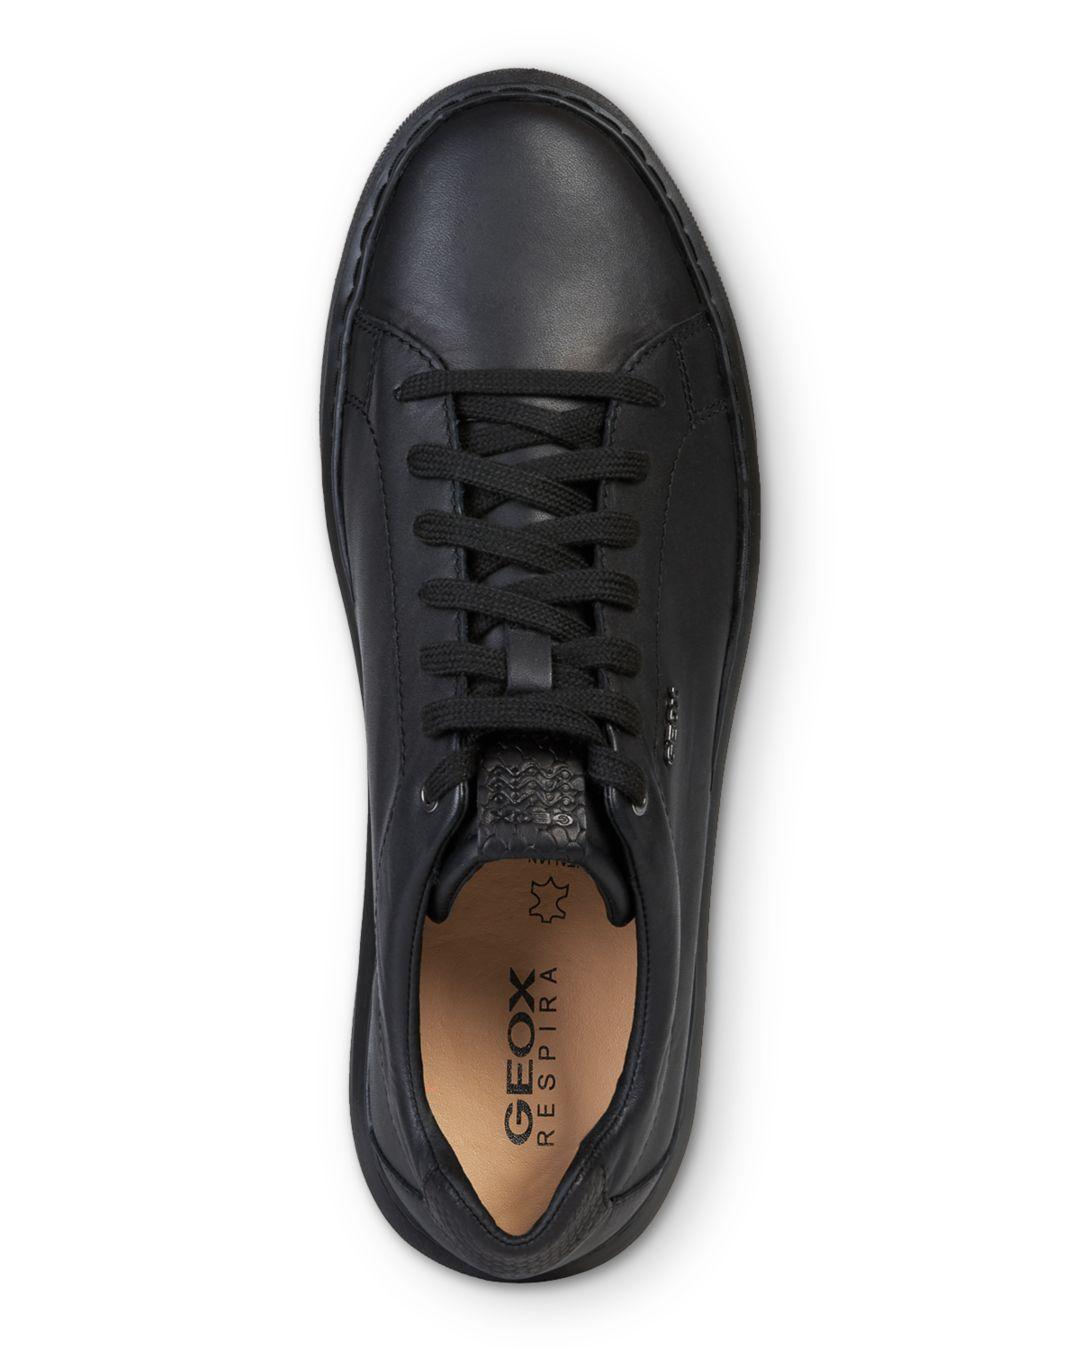 Geox Deiven Leather Sneakers in Black for Men | Lyst